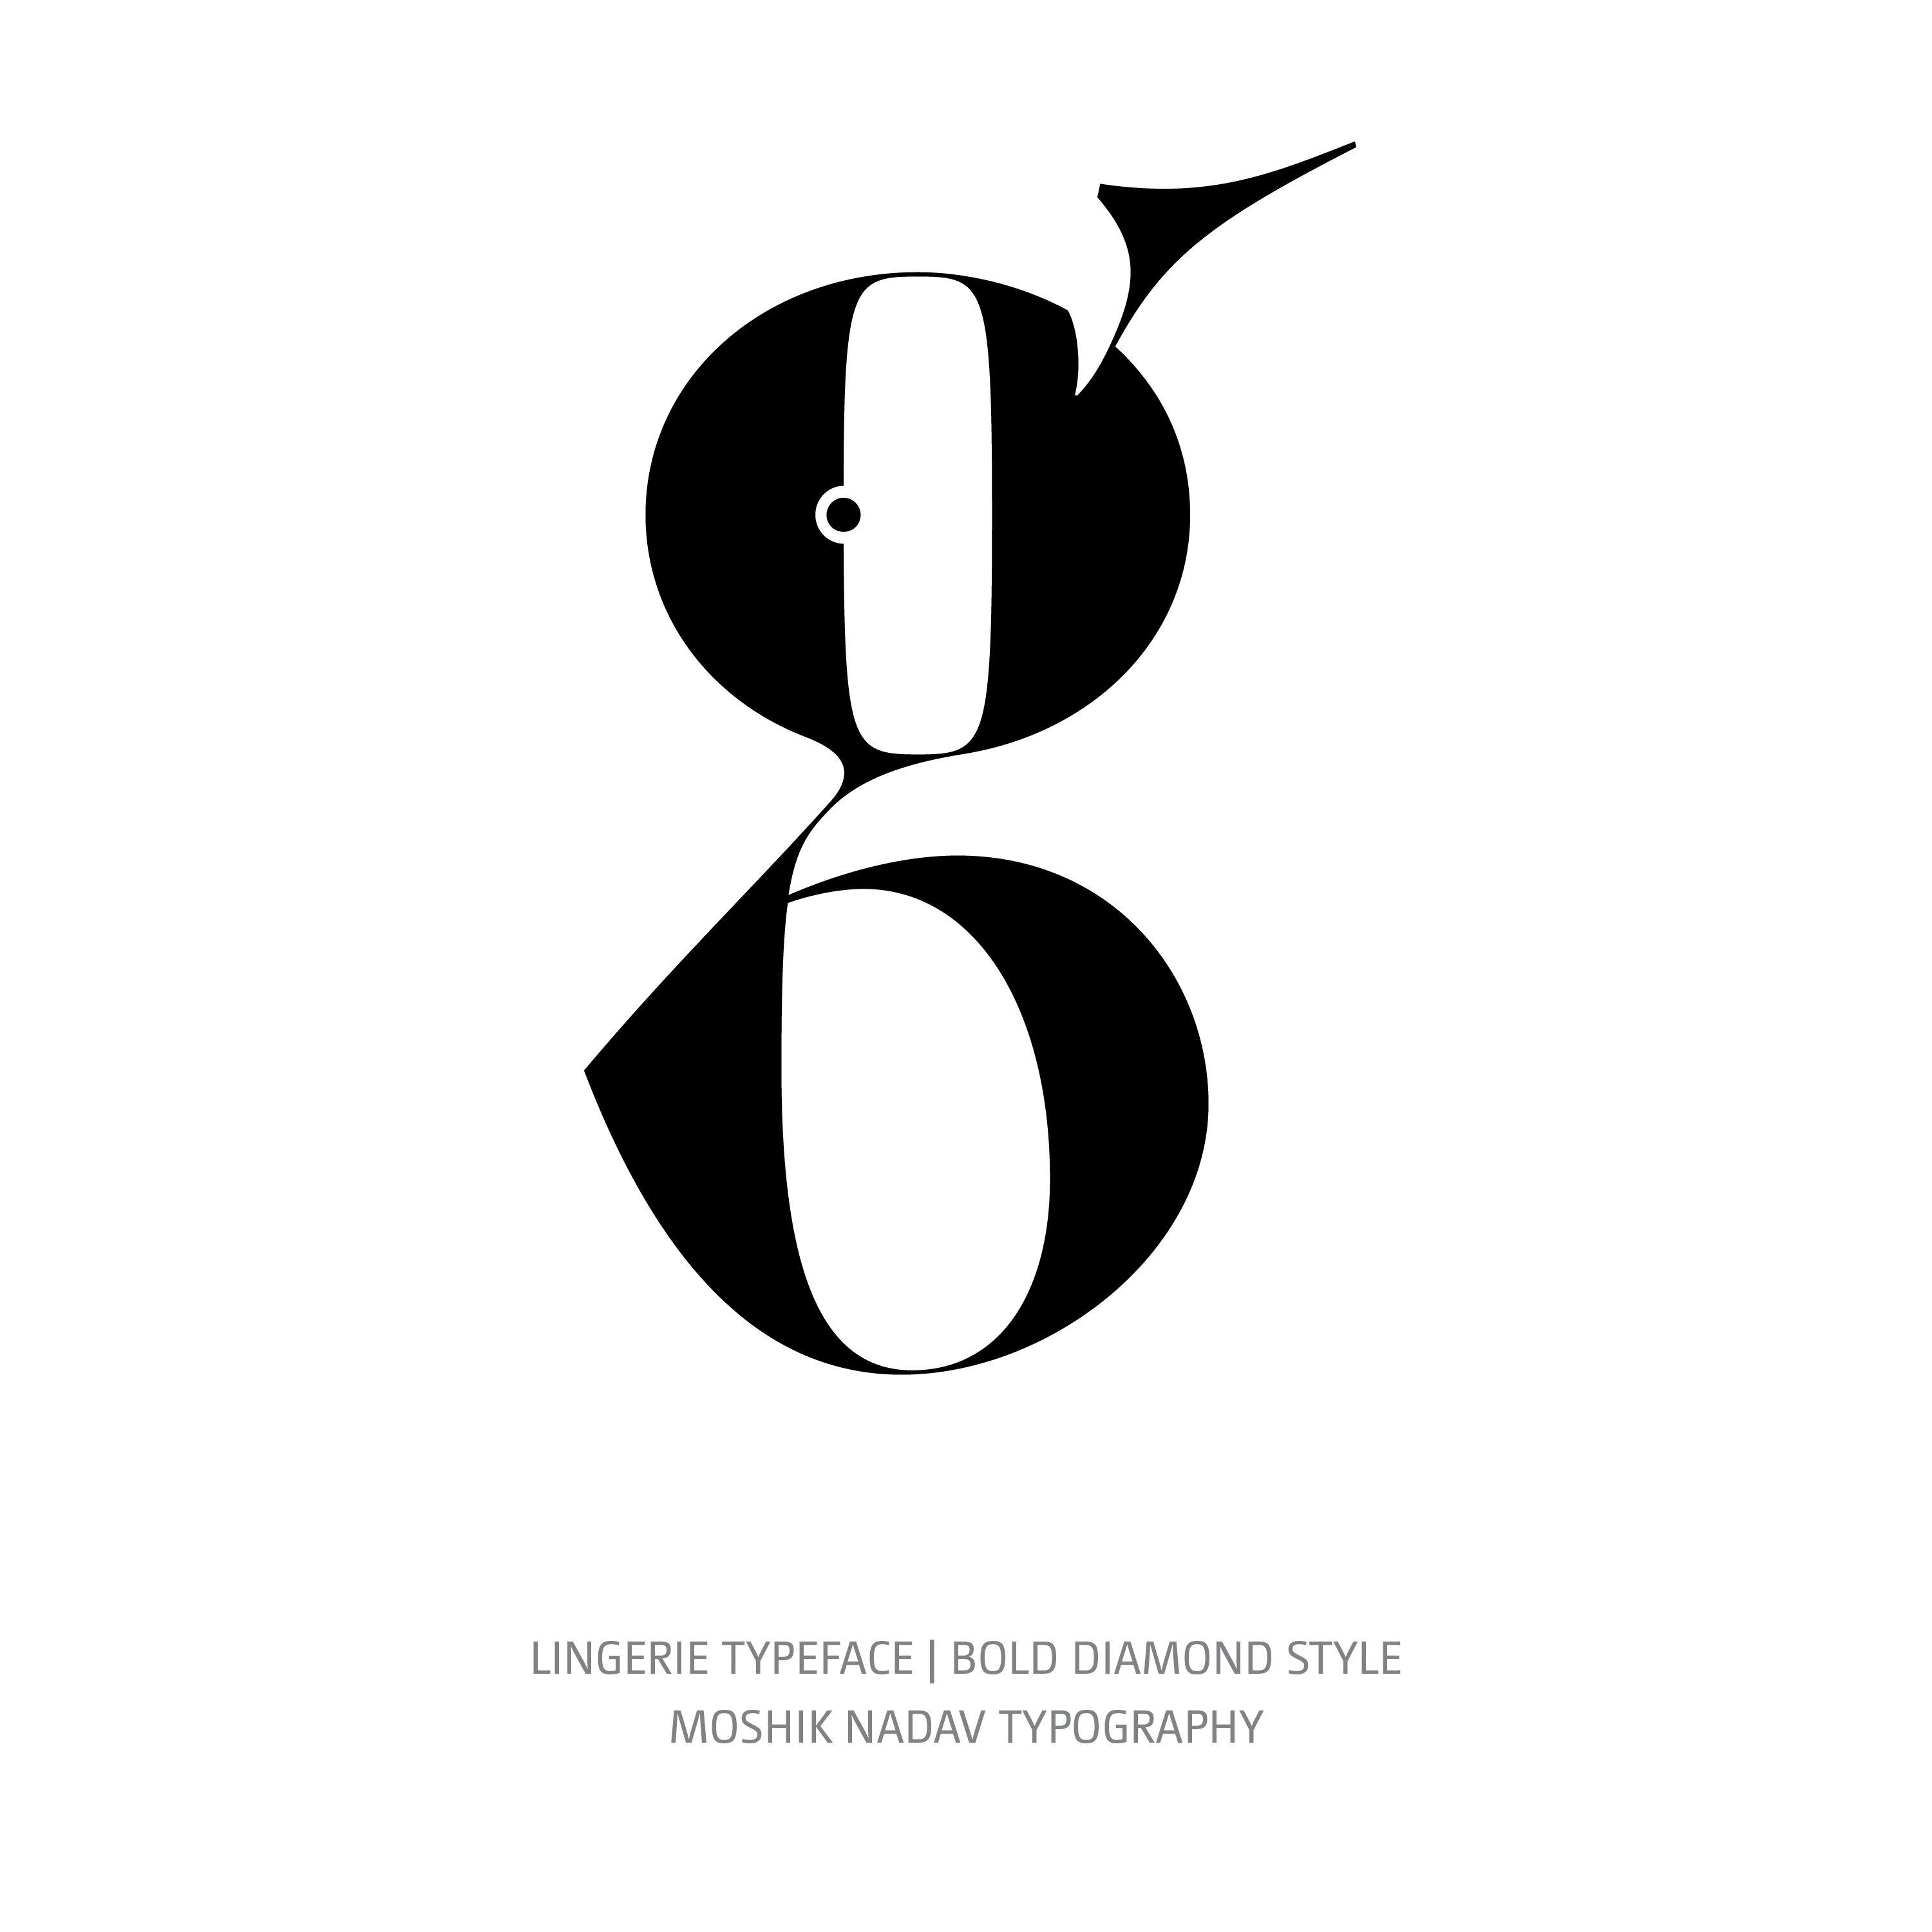 Lingerie Typeface Bold Diamond g